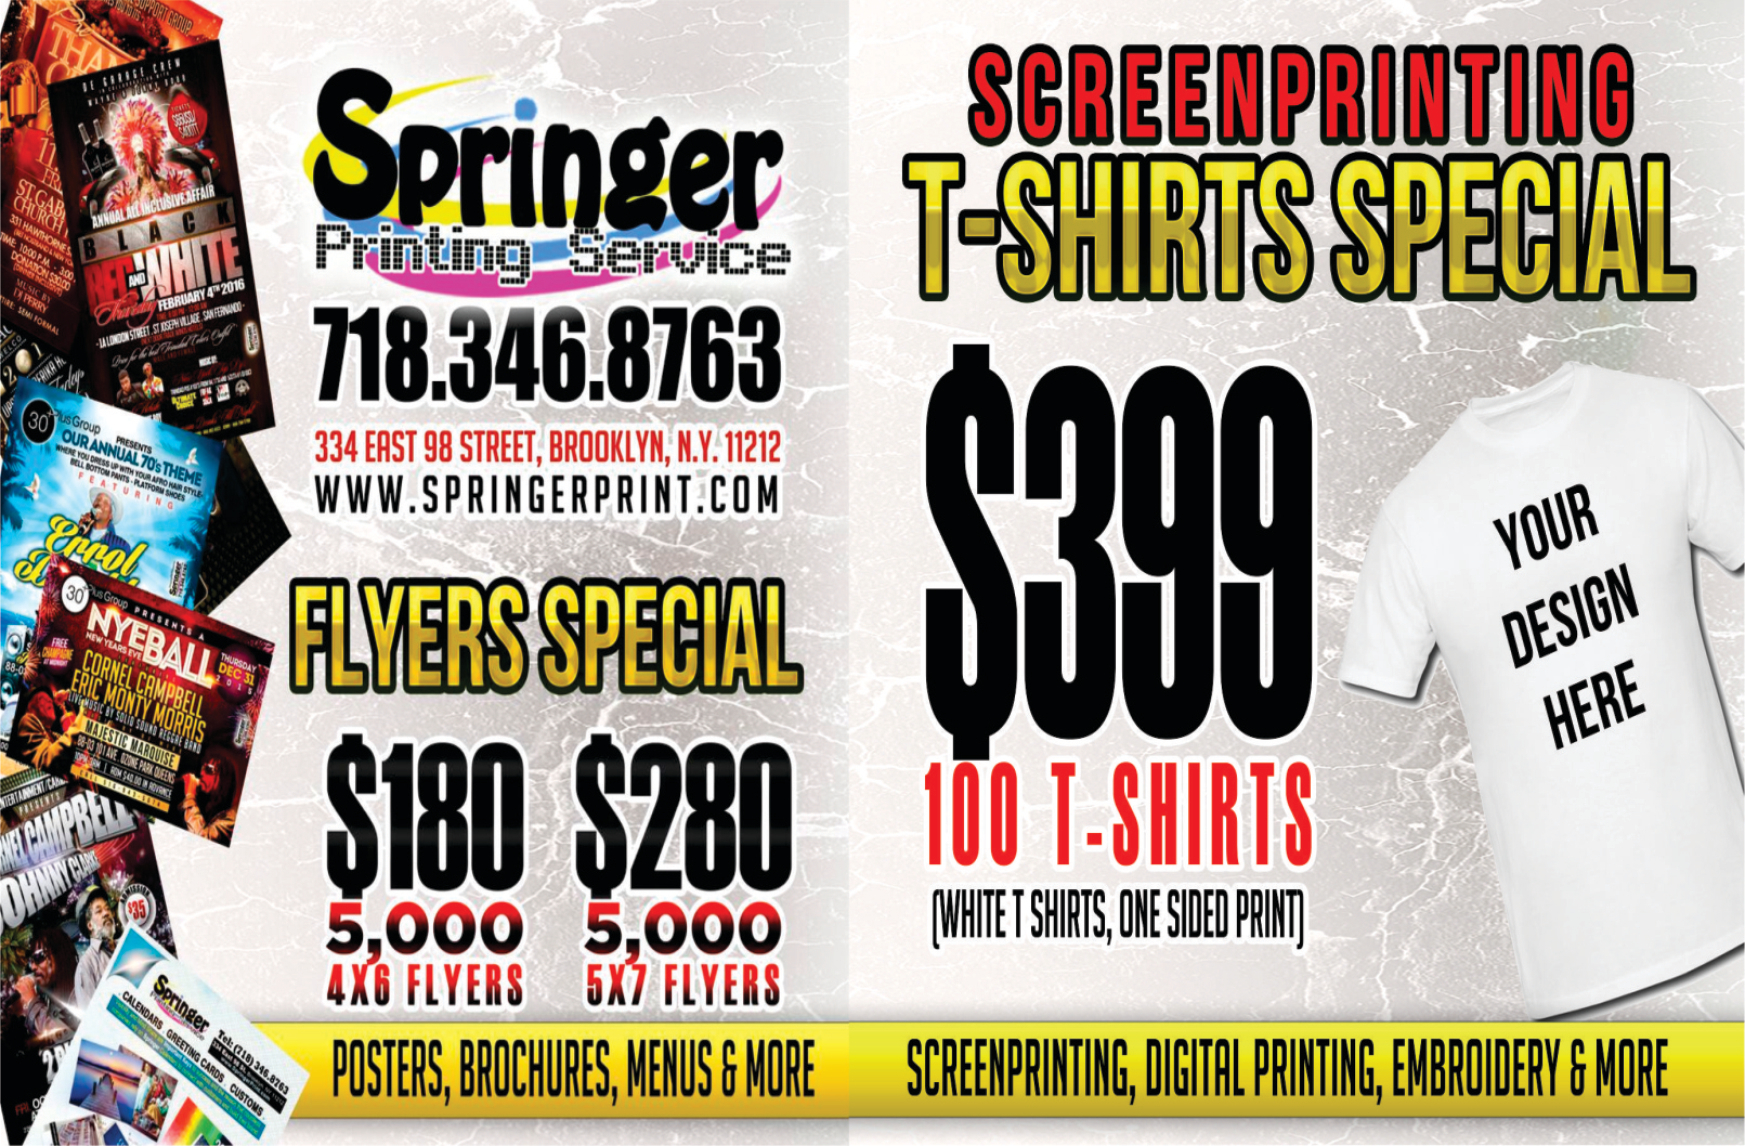 Springer Screen Printing Photo